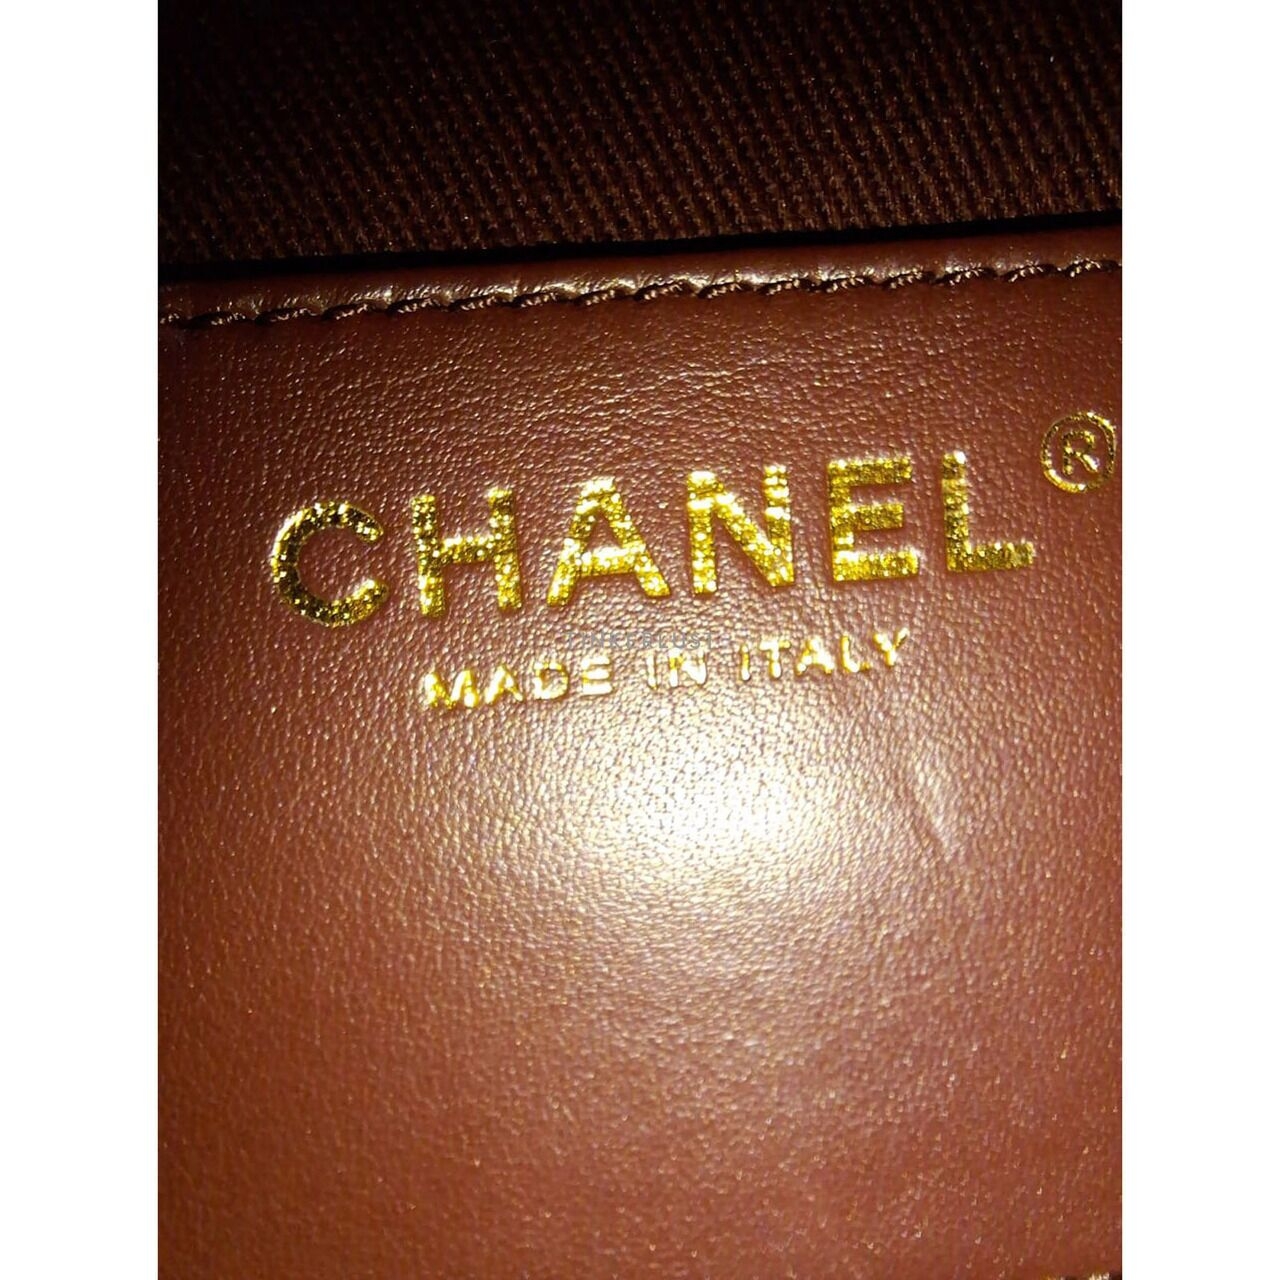 Chanel Business Affinity Bucket Chip Sling Bag